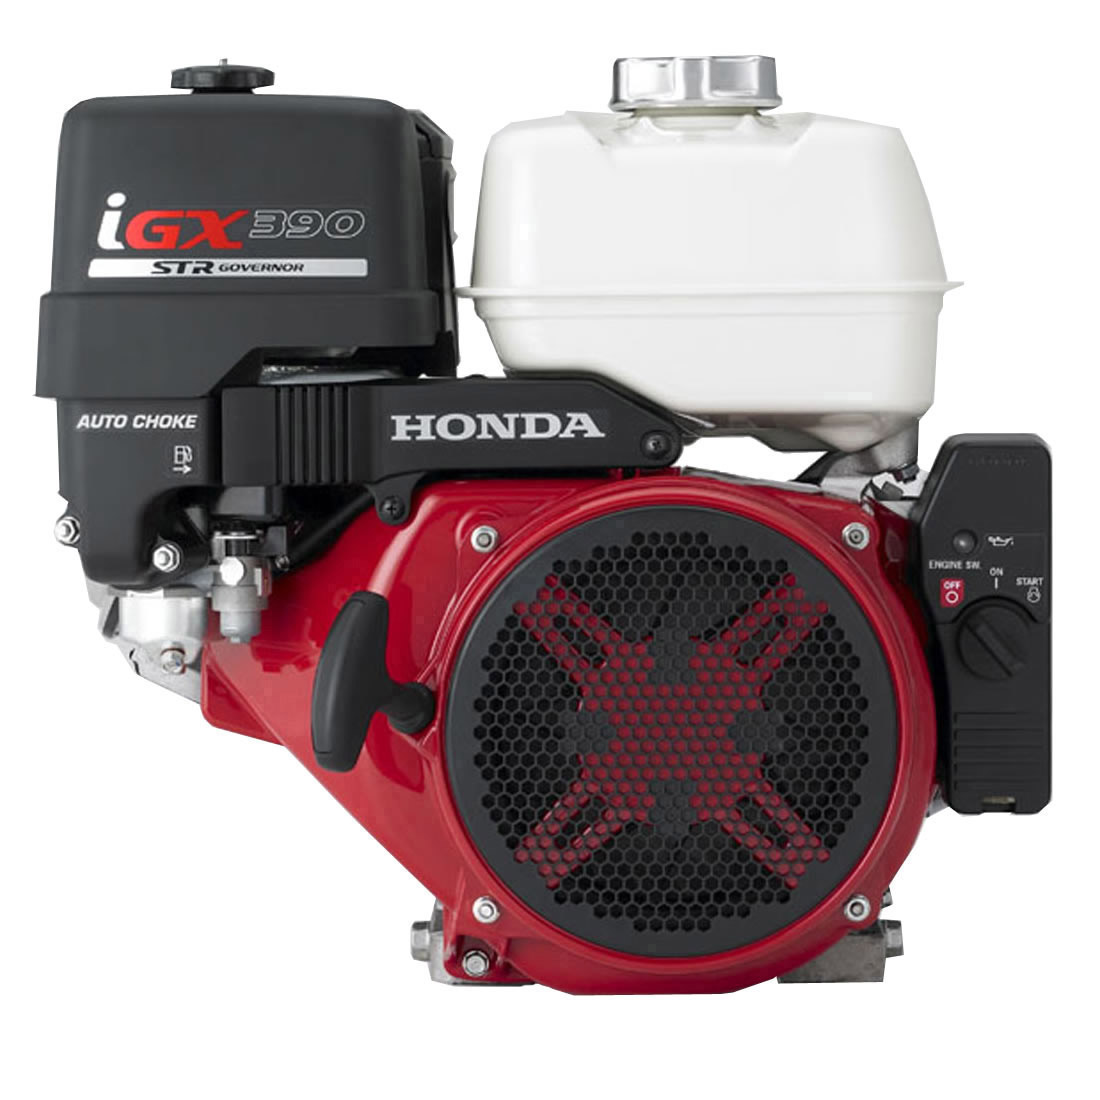 Honda Engines | Small Engine Models, Manuals, Parts, & Resources